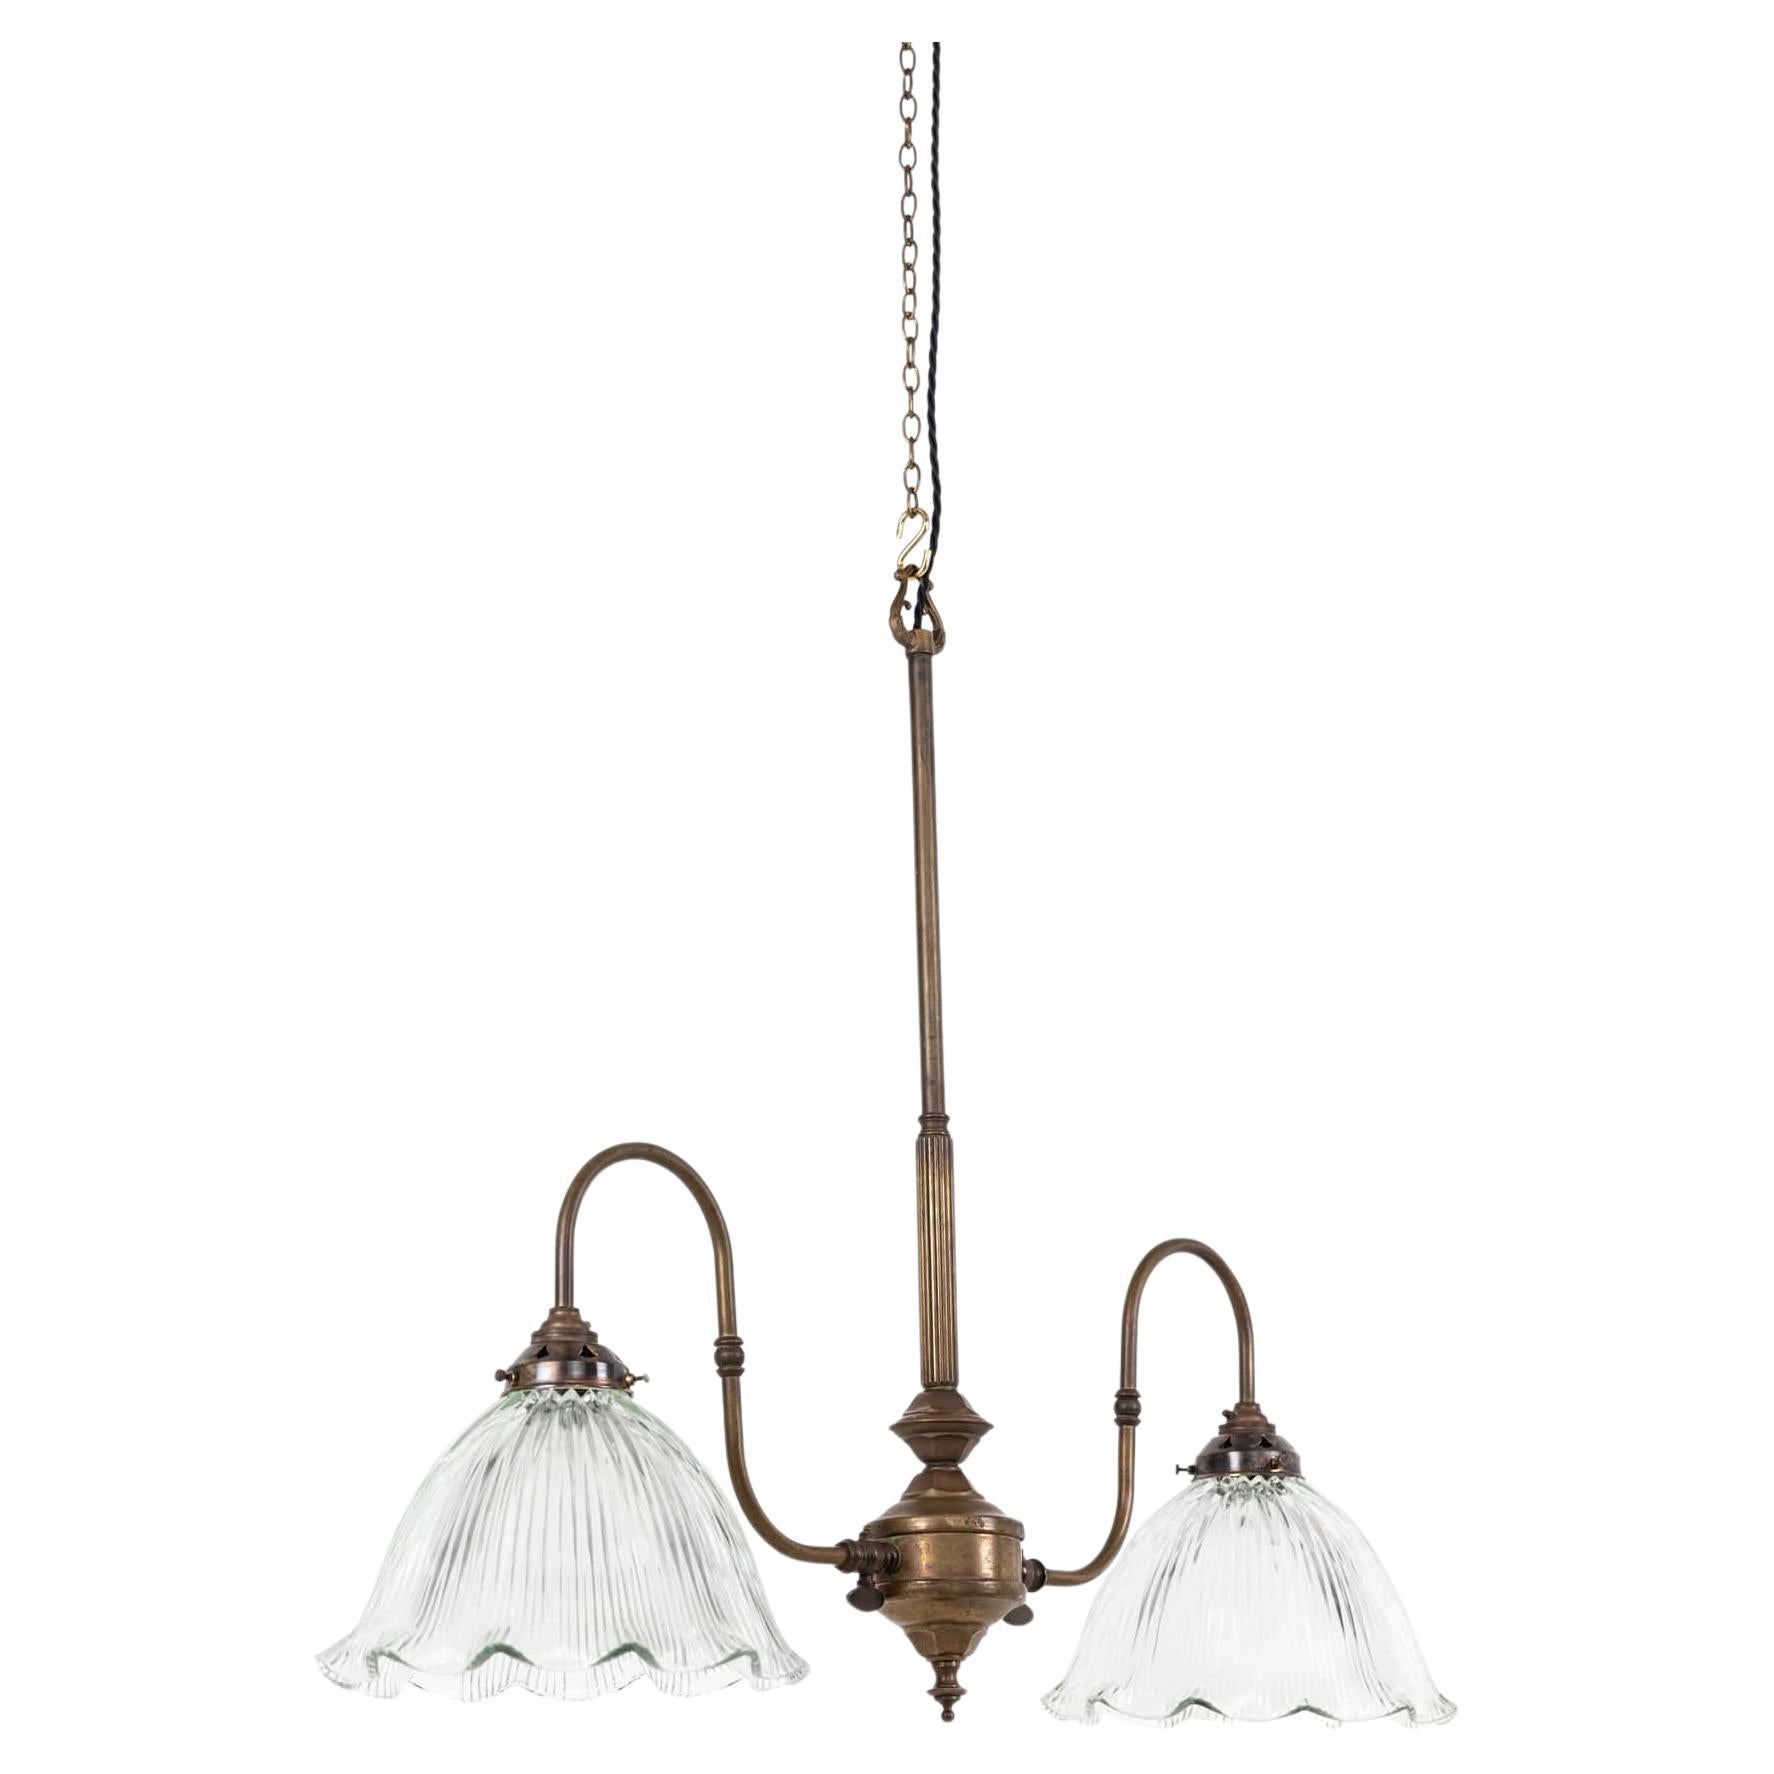 Antique Arts & Crafts Brass Prismatic Glass Ceiling Pendant Light Lamp, C.1920